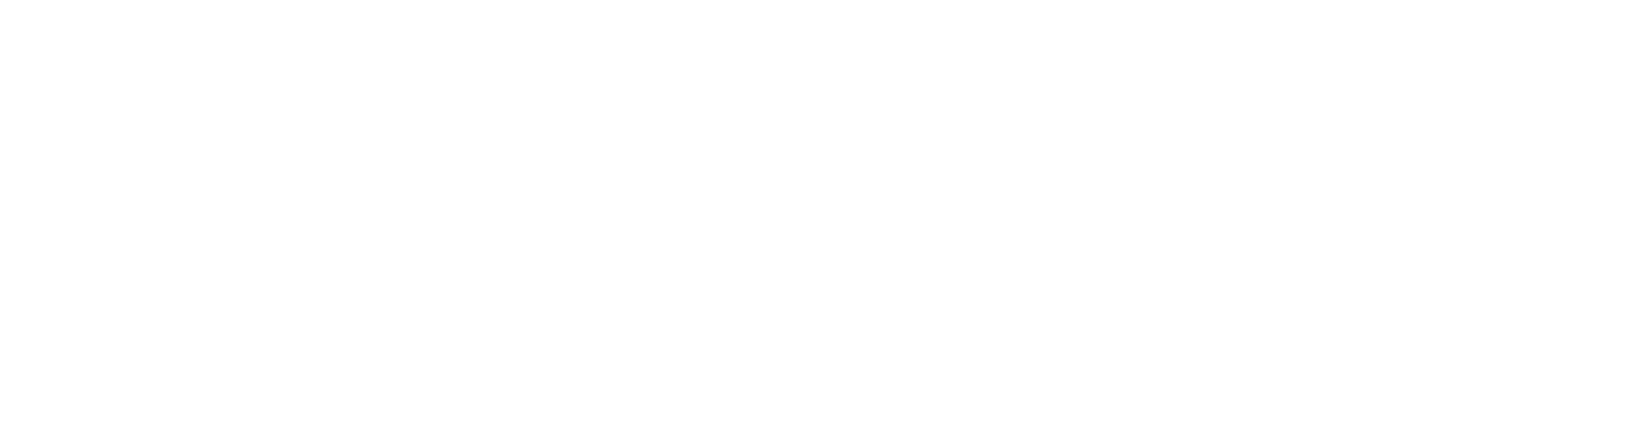 Bloober Team Logo groß für dunkle Hintergründe (transparentes PNG)